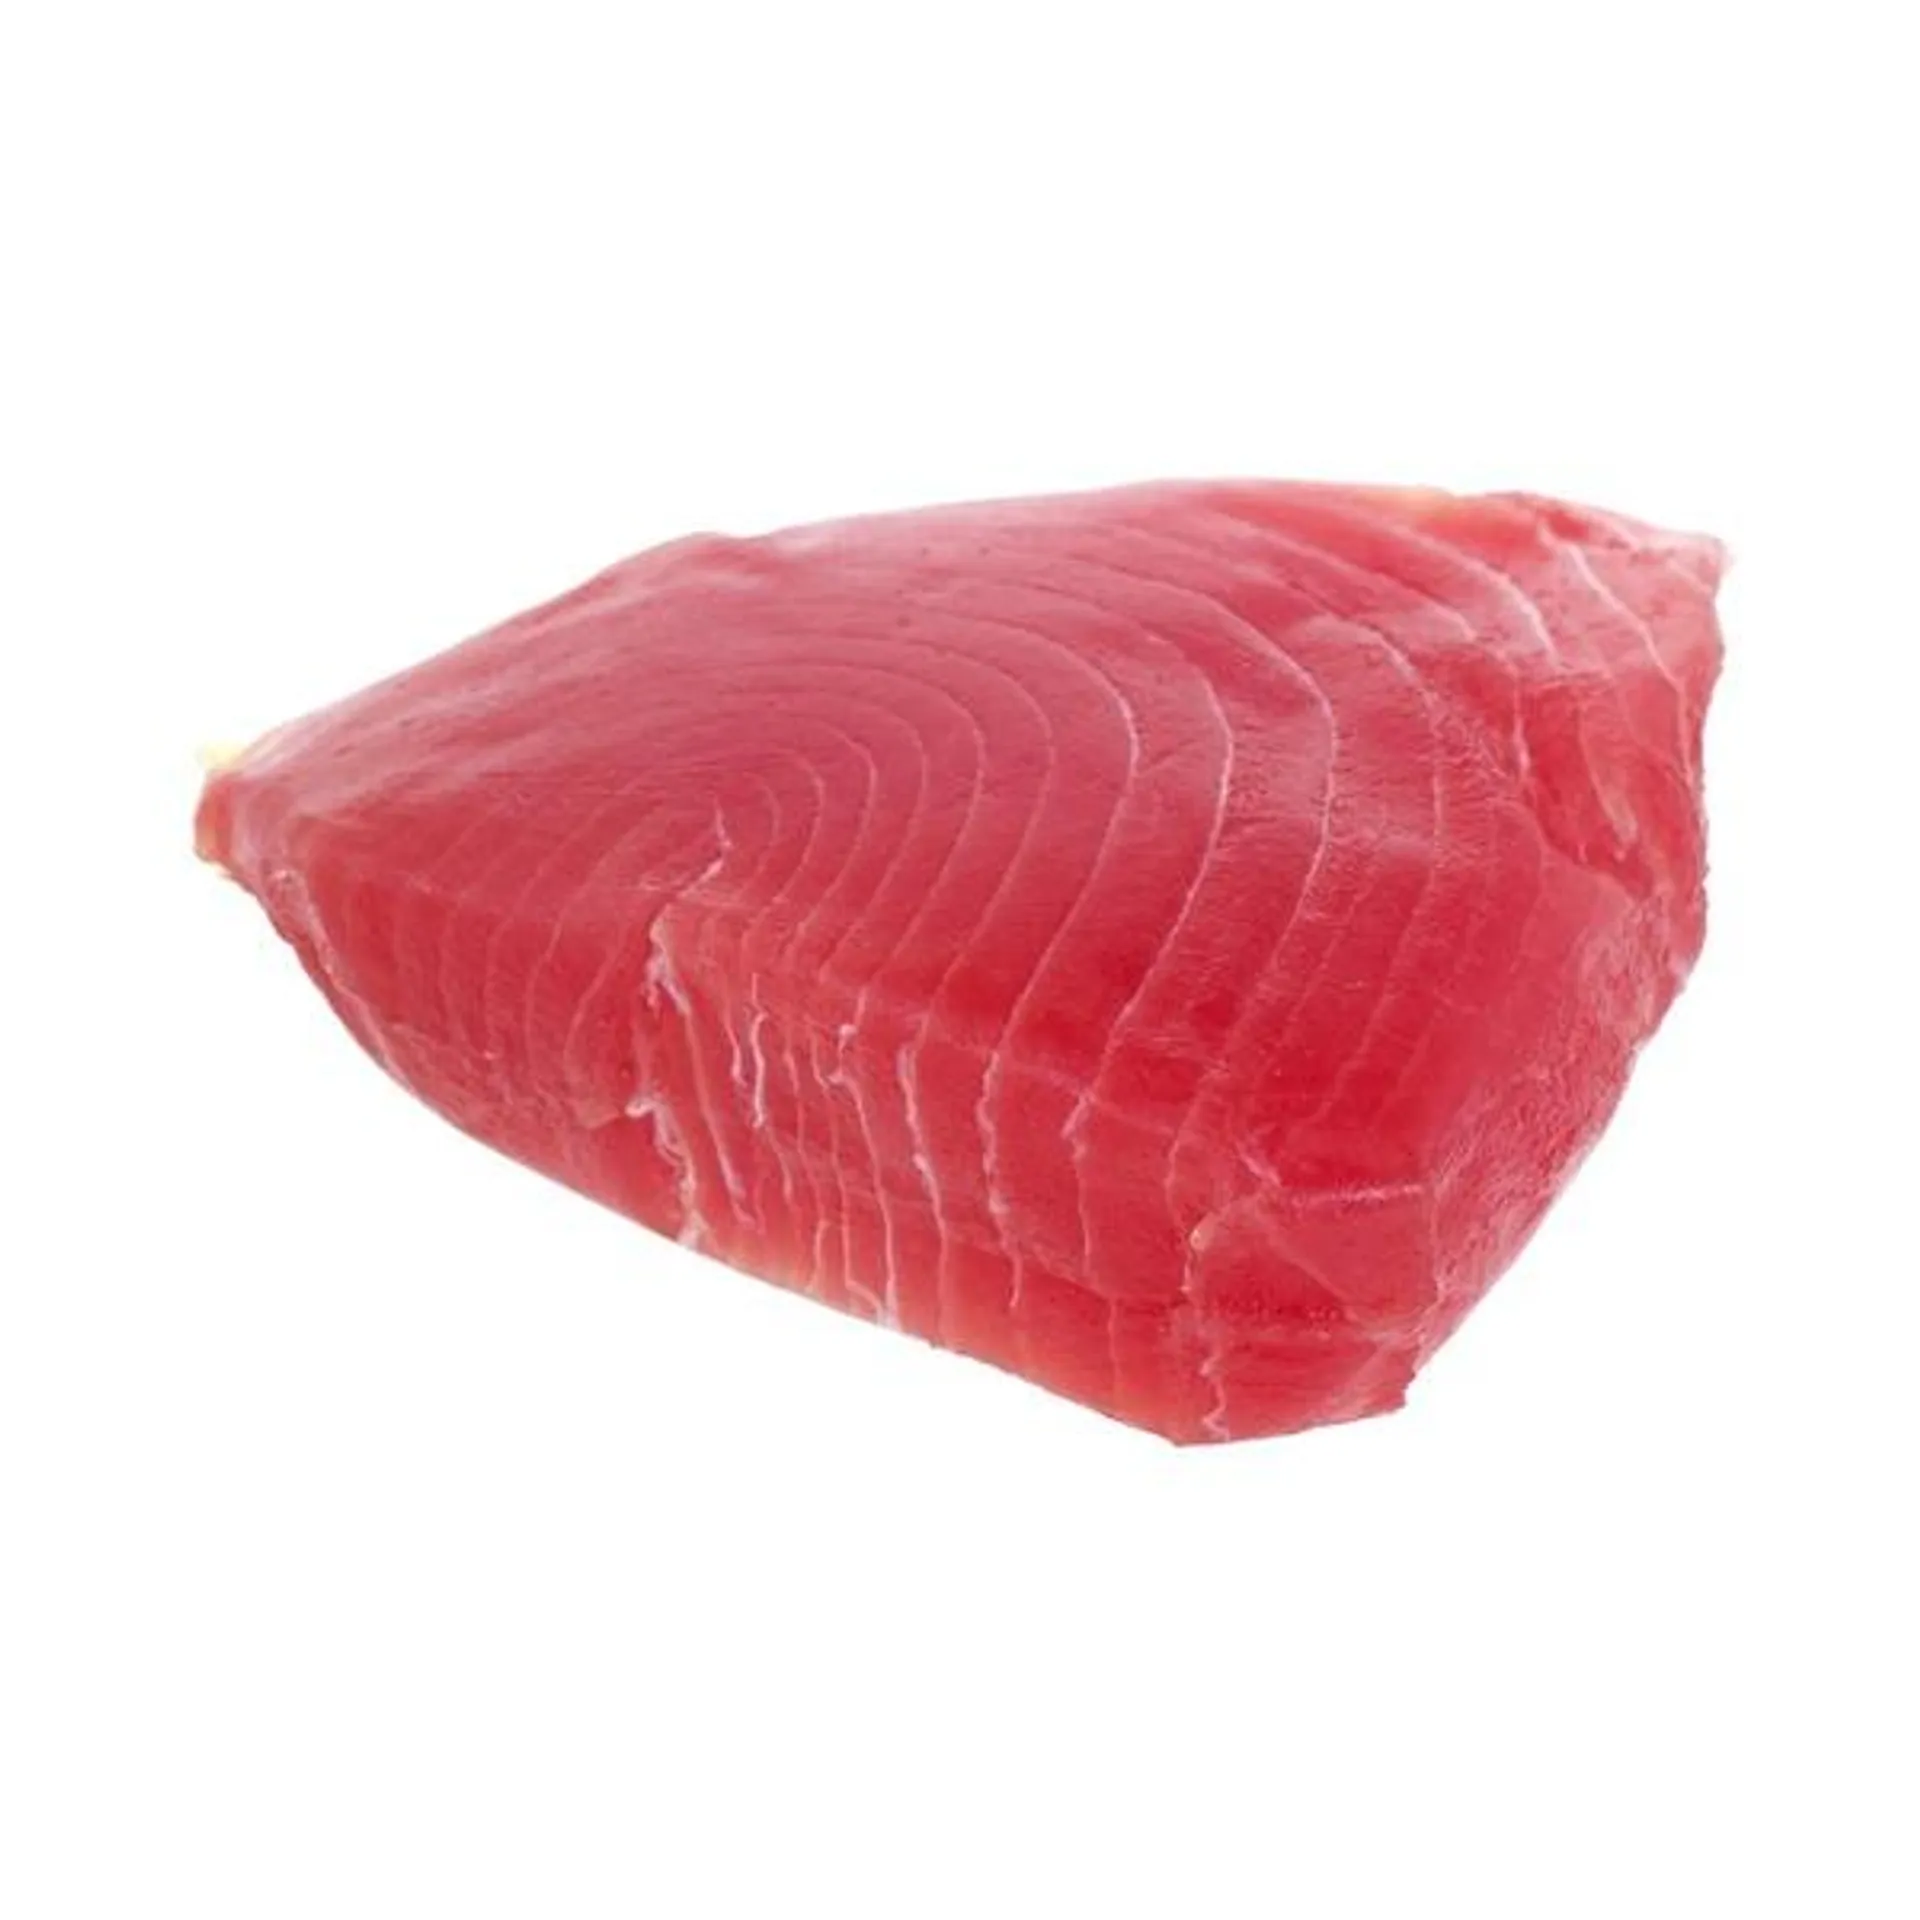 Previously Frozen Ahi Tuna Steak